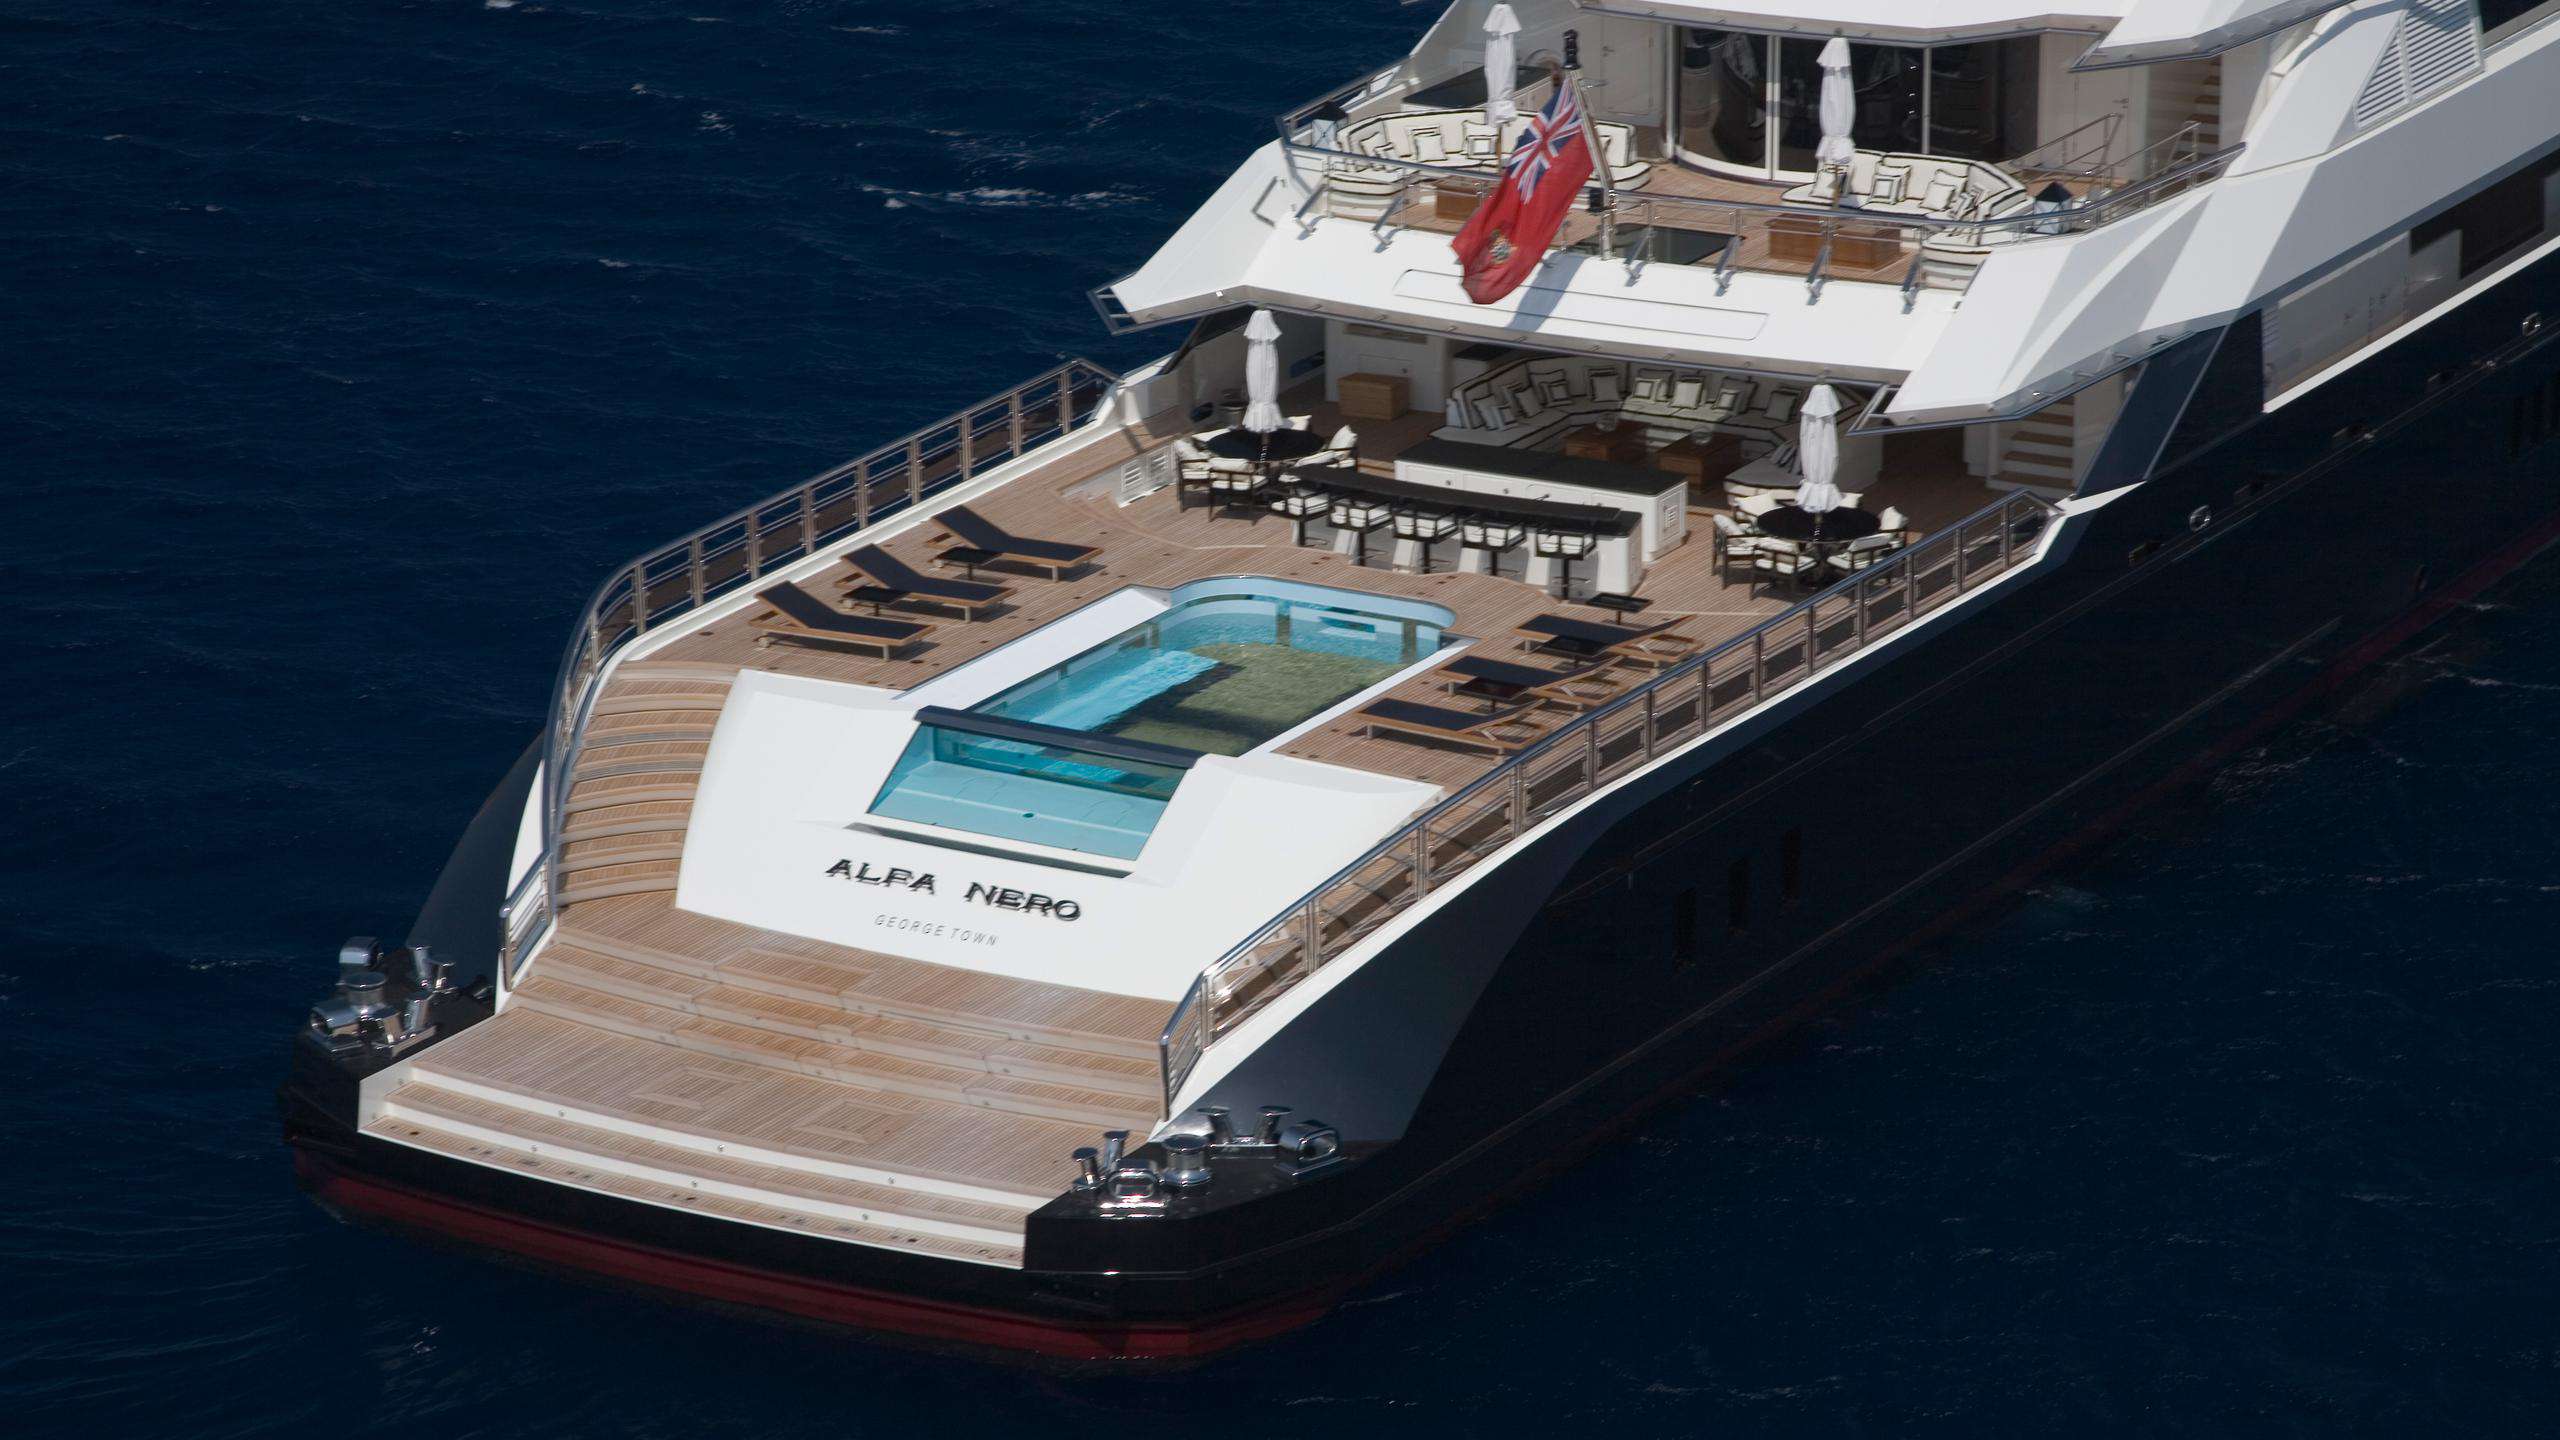 alfa nero yacht for sale